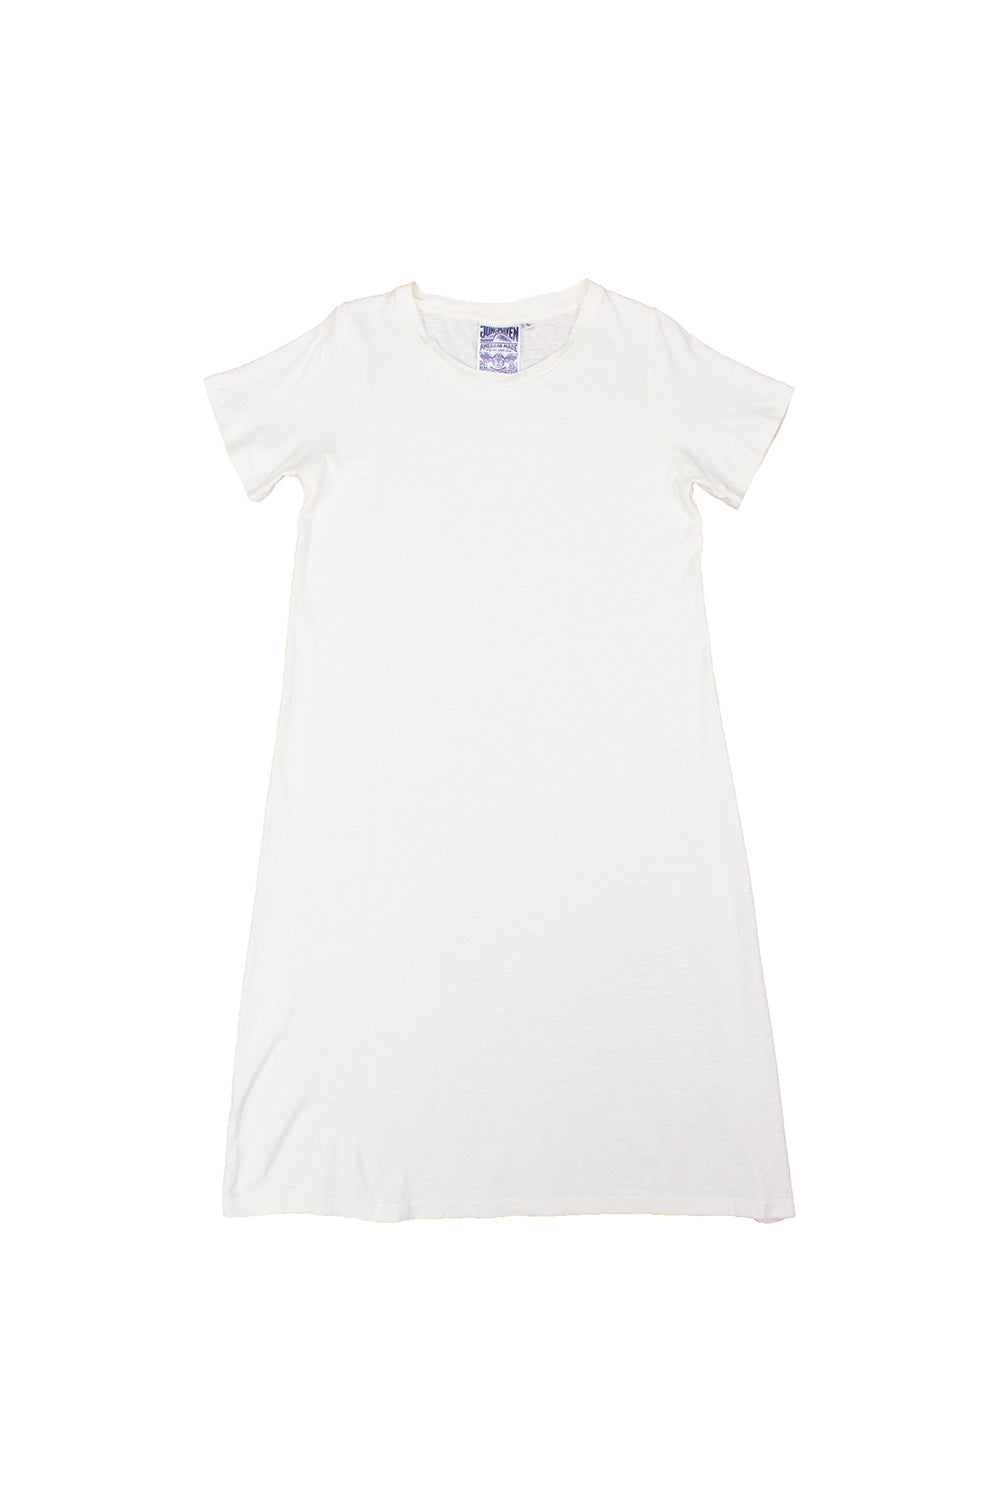 Jumper Dress | Jungmaven Hemp Clothing - USA Made Washed White / L